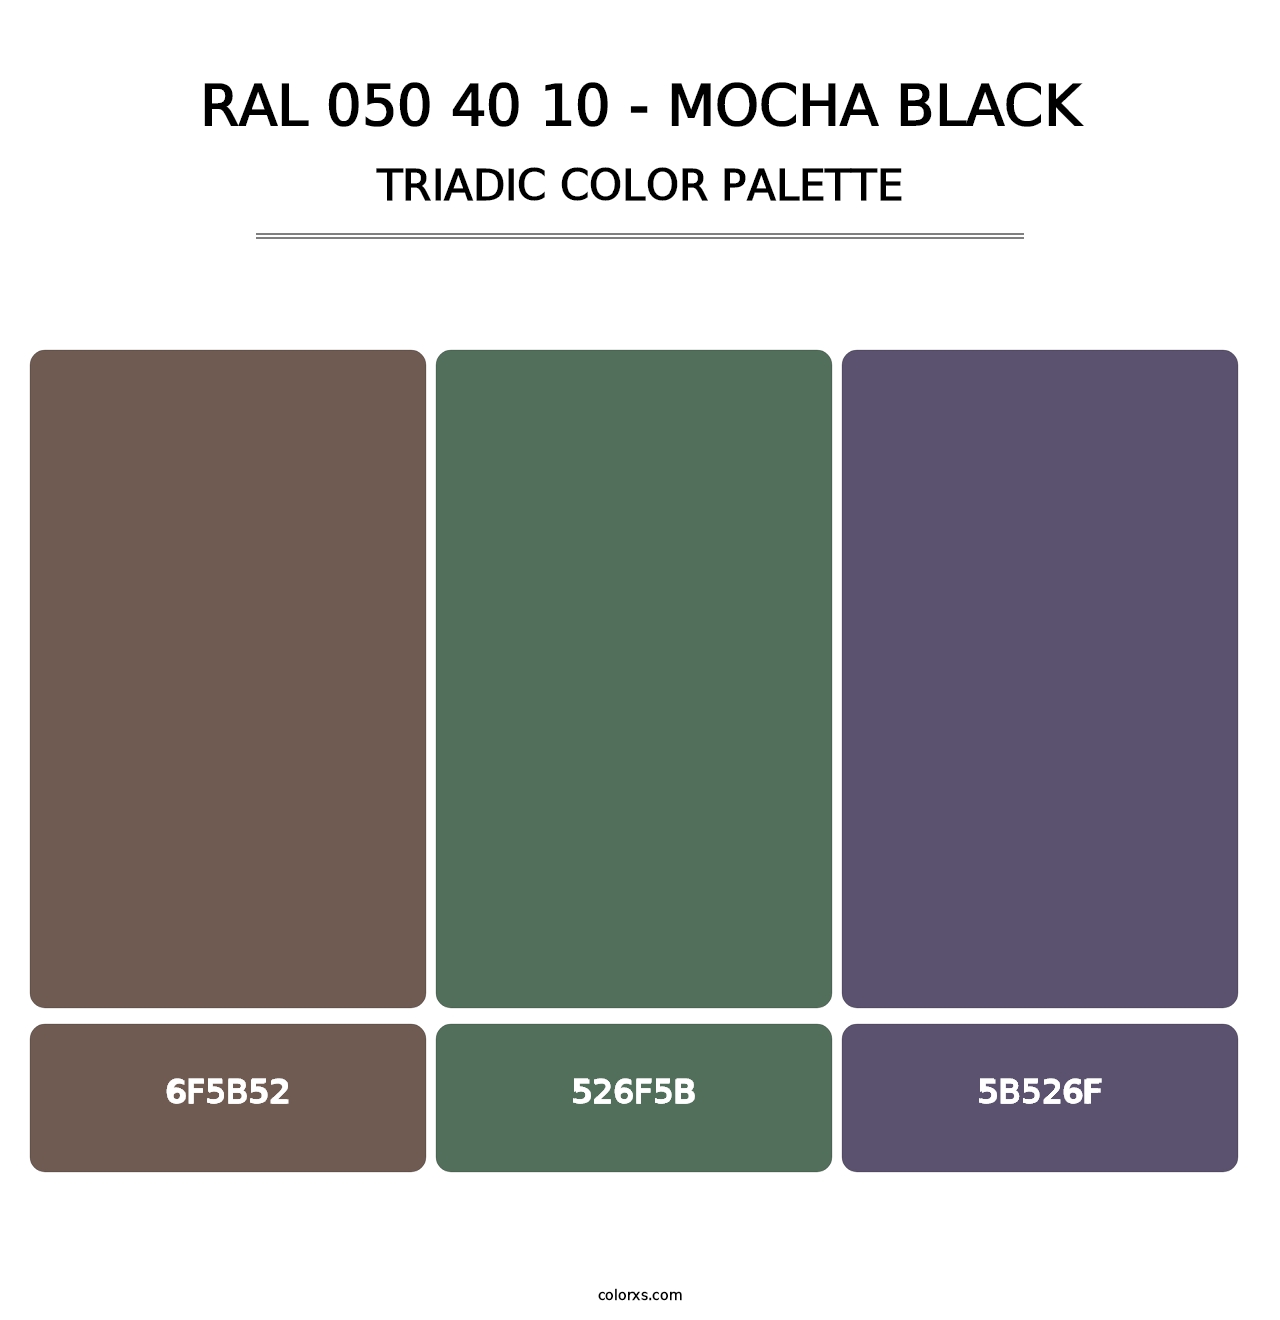 RAL 050 40 10 - Mocha Black - Triadic Color Palette